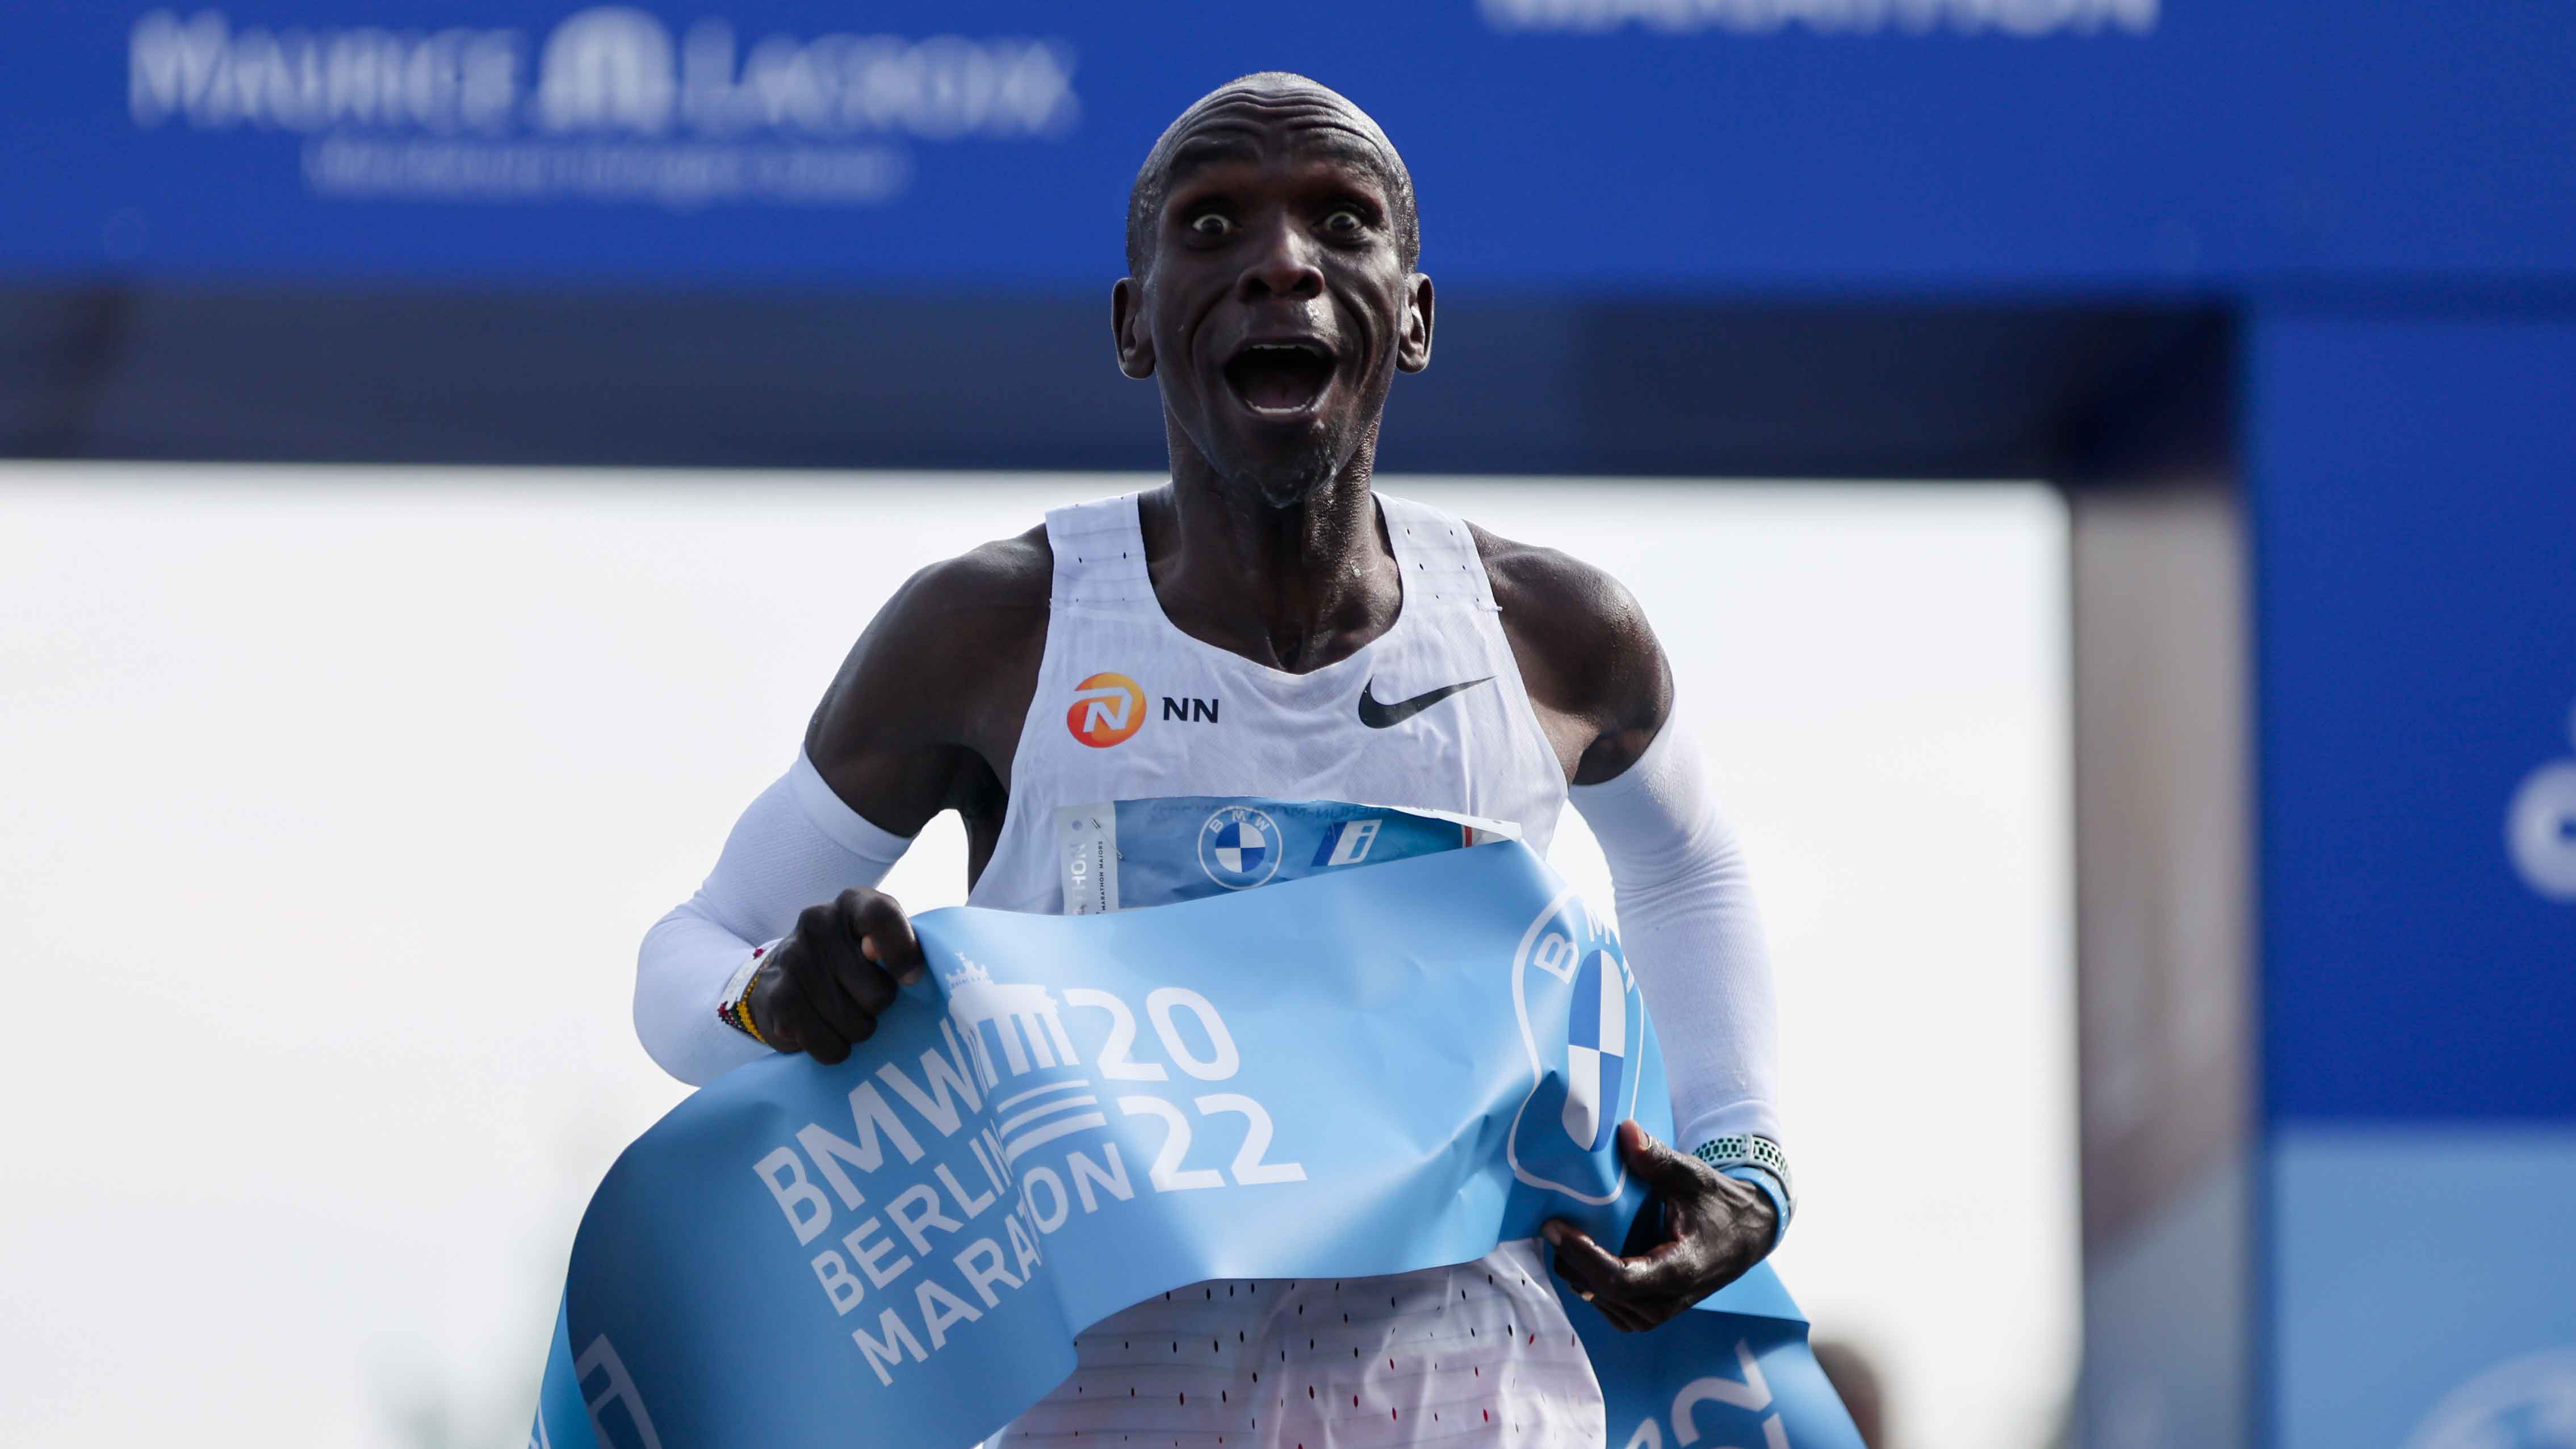 Kenya's Eliud Kipchoge Sets World Record in Berlin Marathon